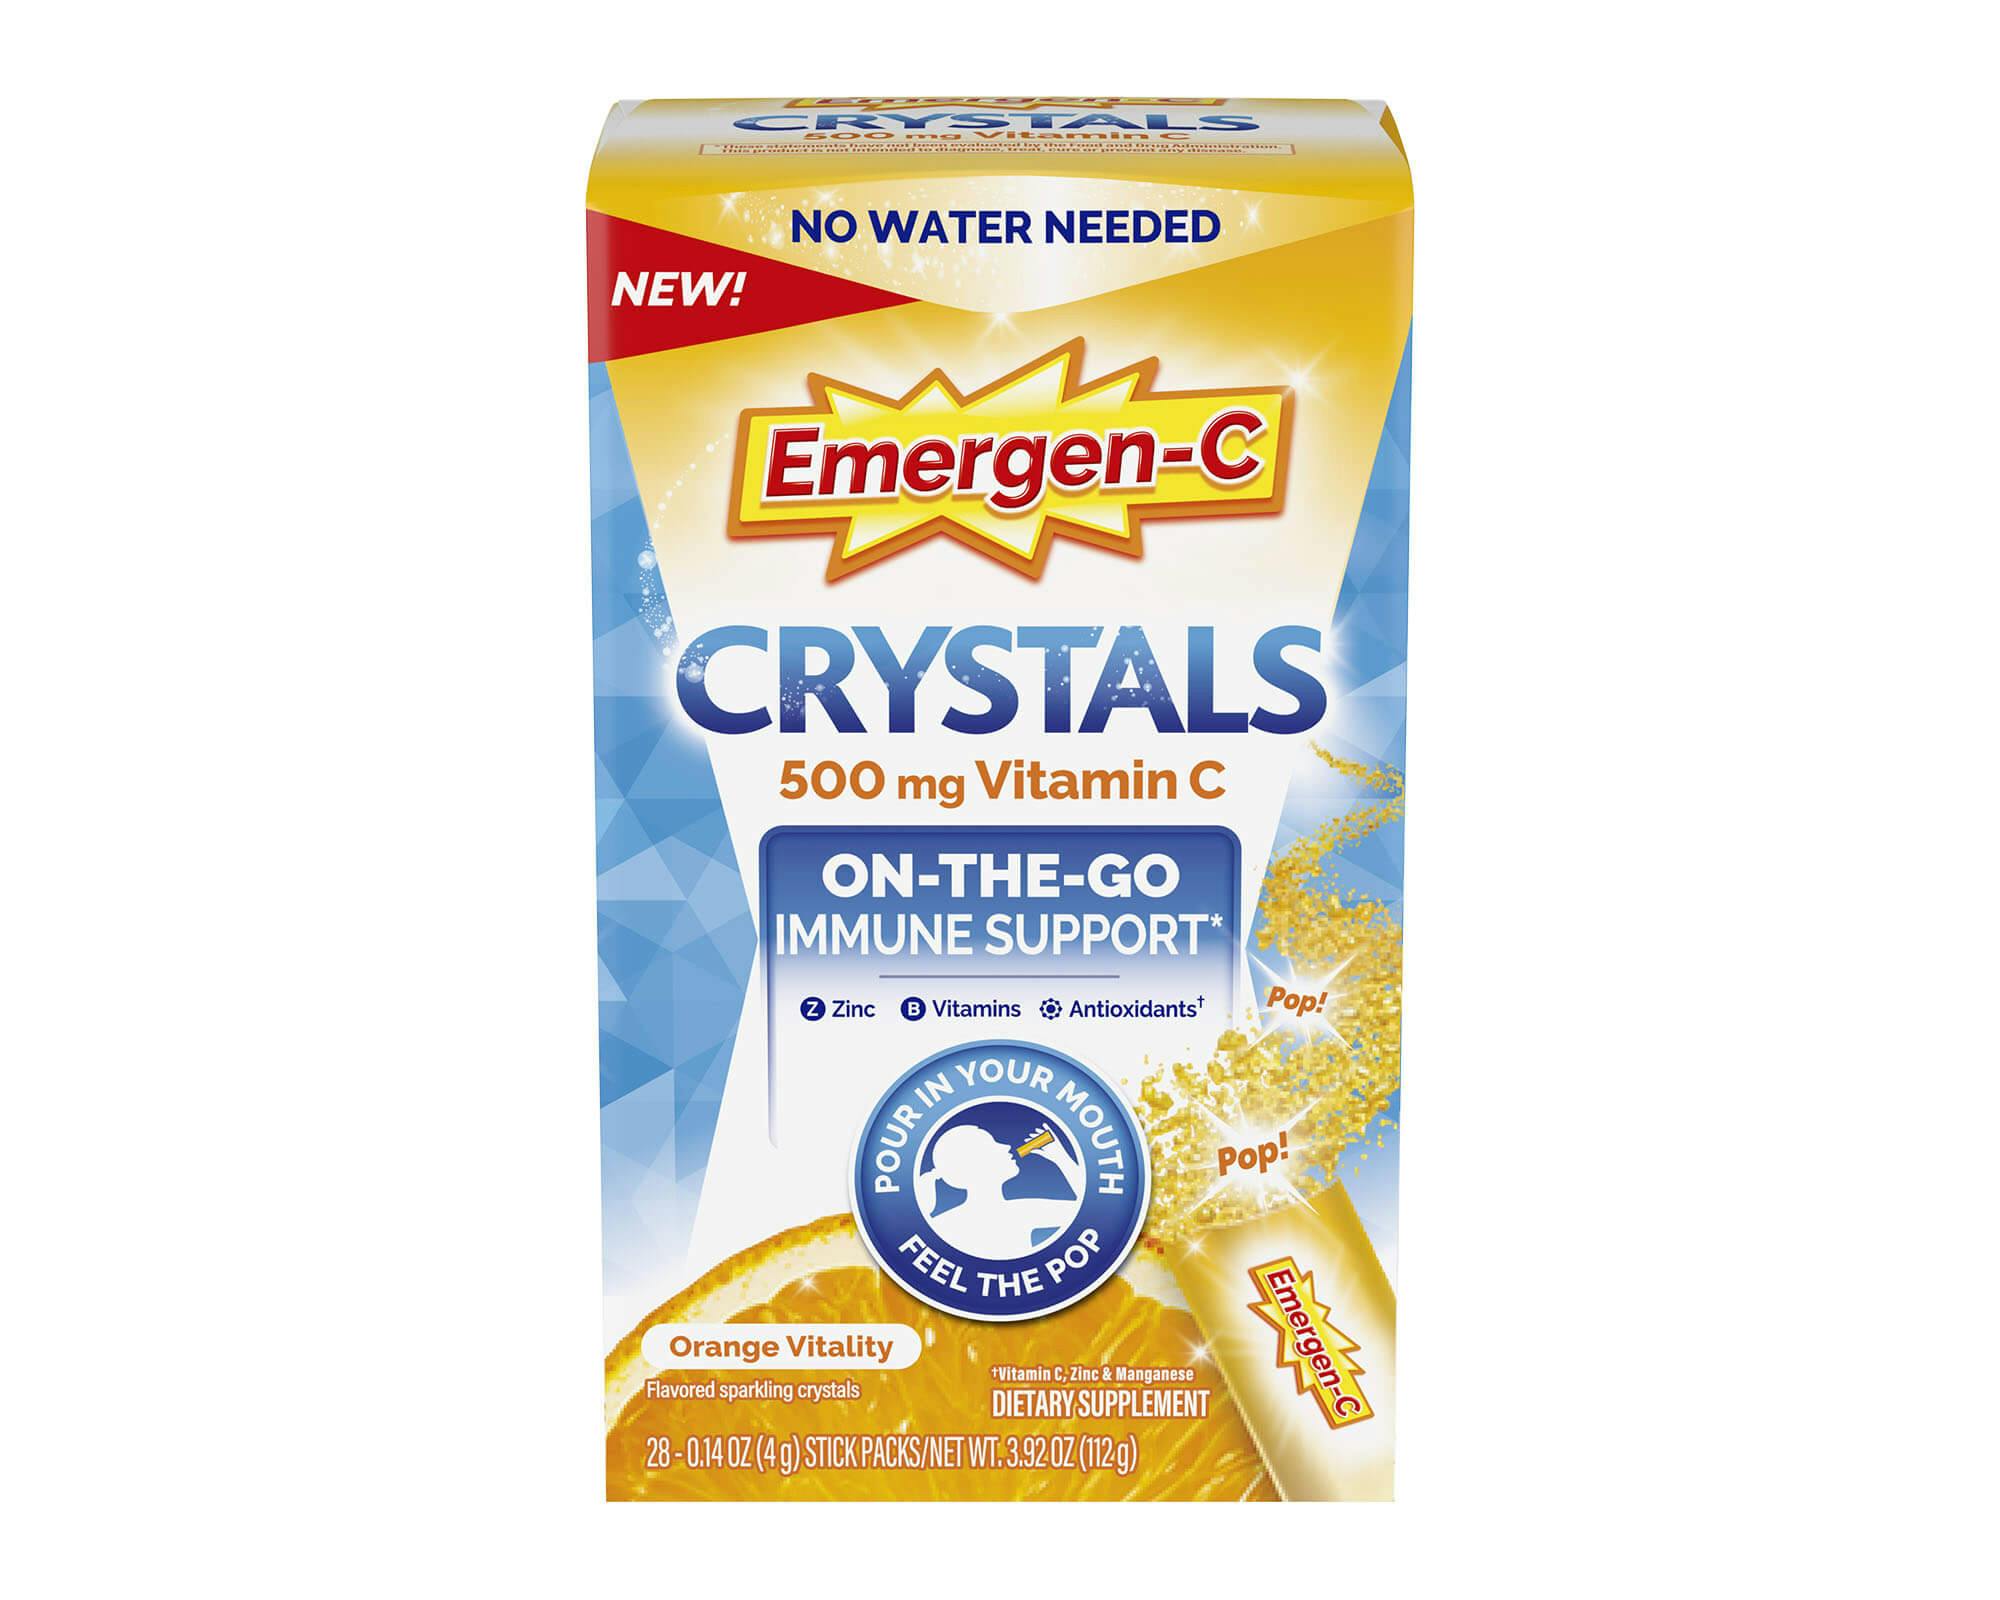 Emergen-C Crystals Orange Vitality product